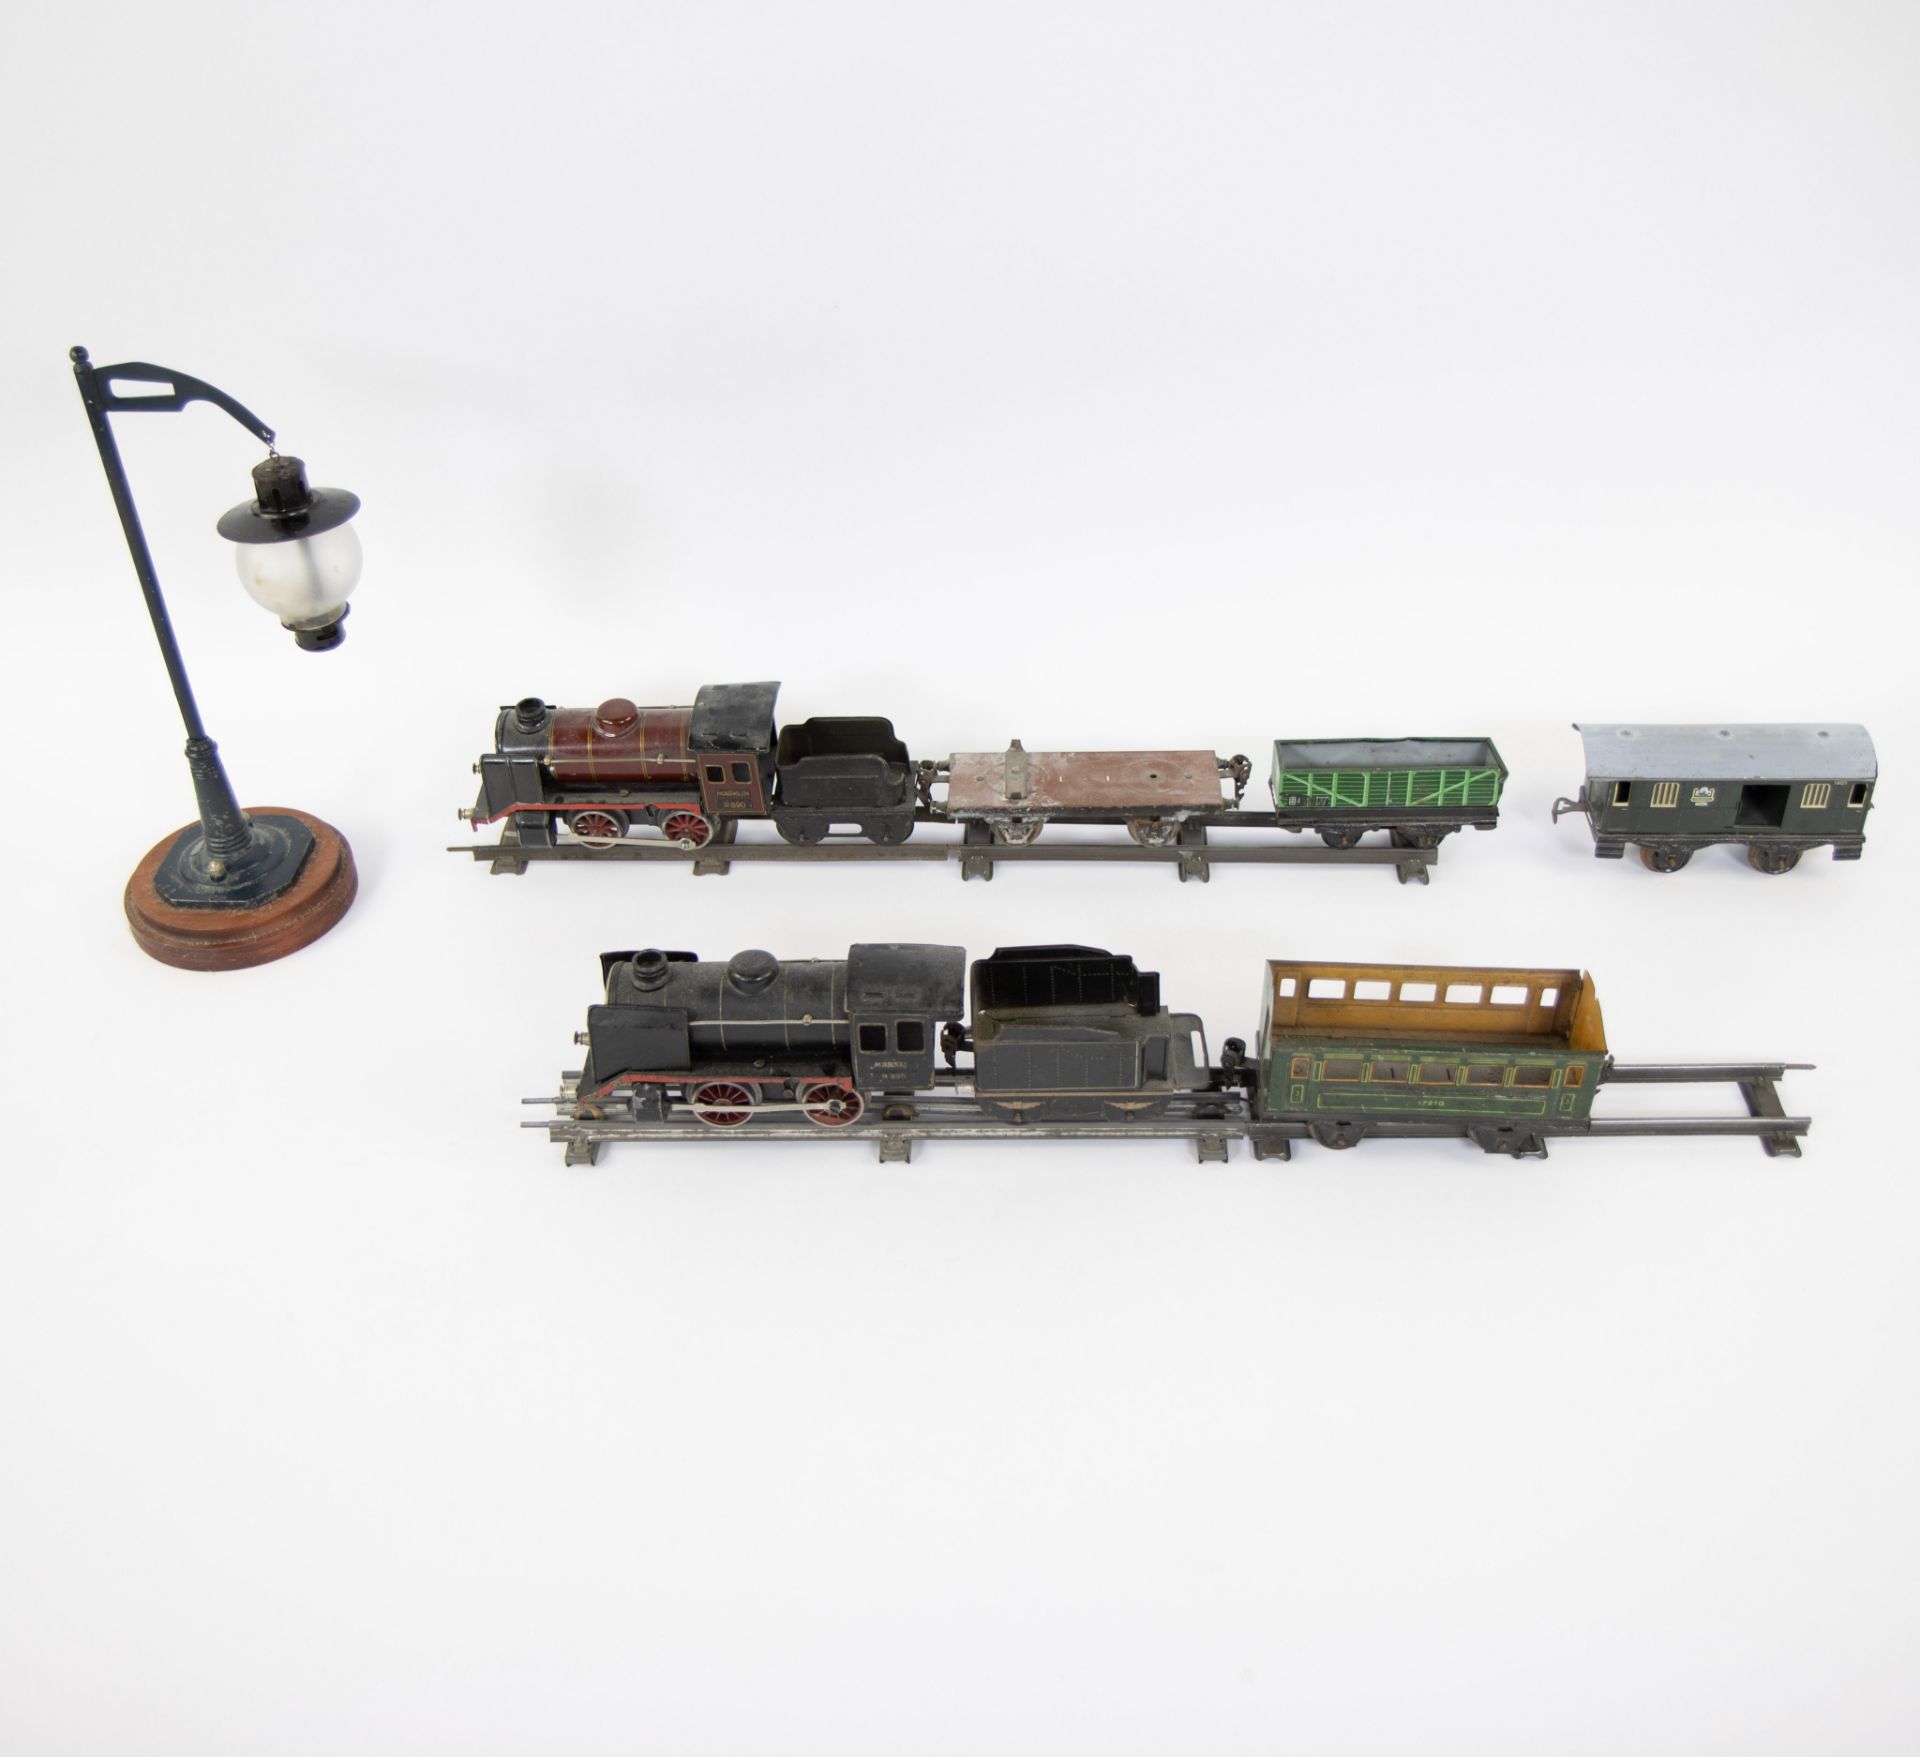 Lot toy trains and wagons MARKLIN locomotive märklin 40281 + 6 wagons, 2 locomotives 890 and 899 wit - Image 2 of 3